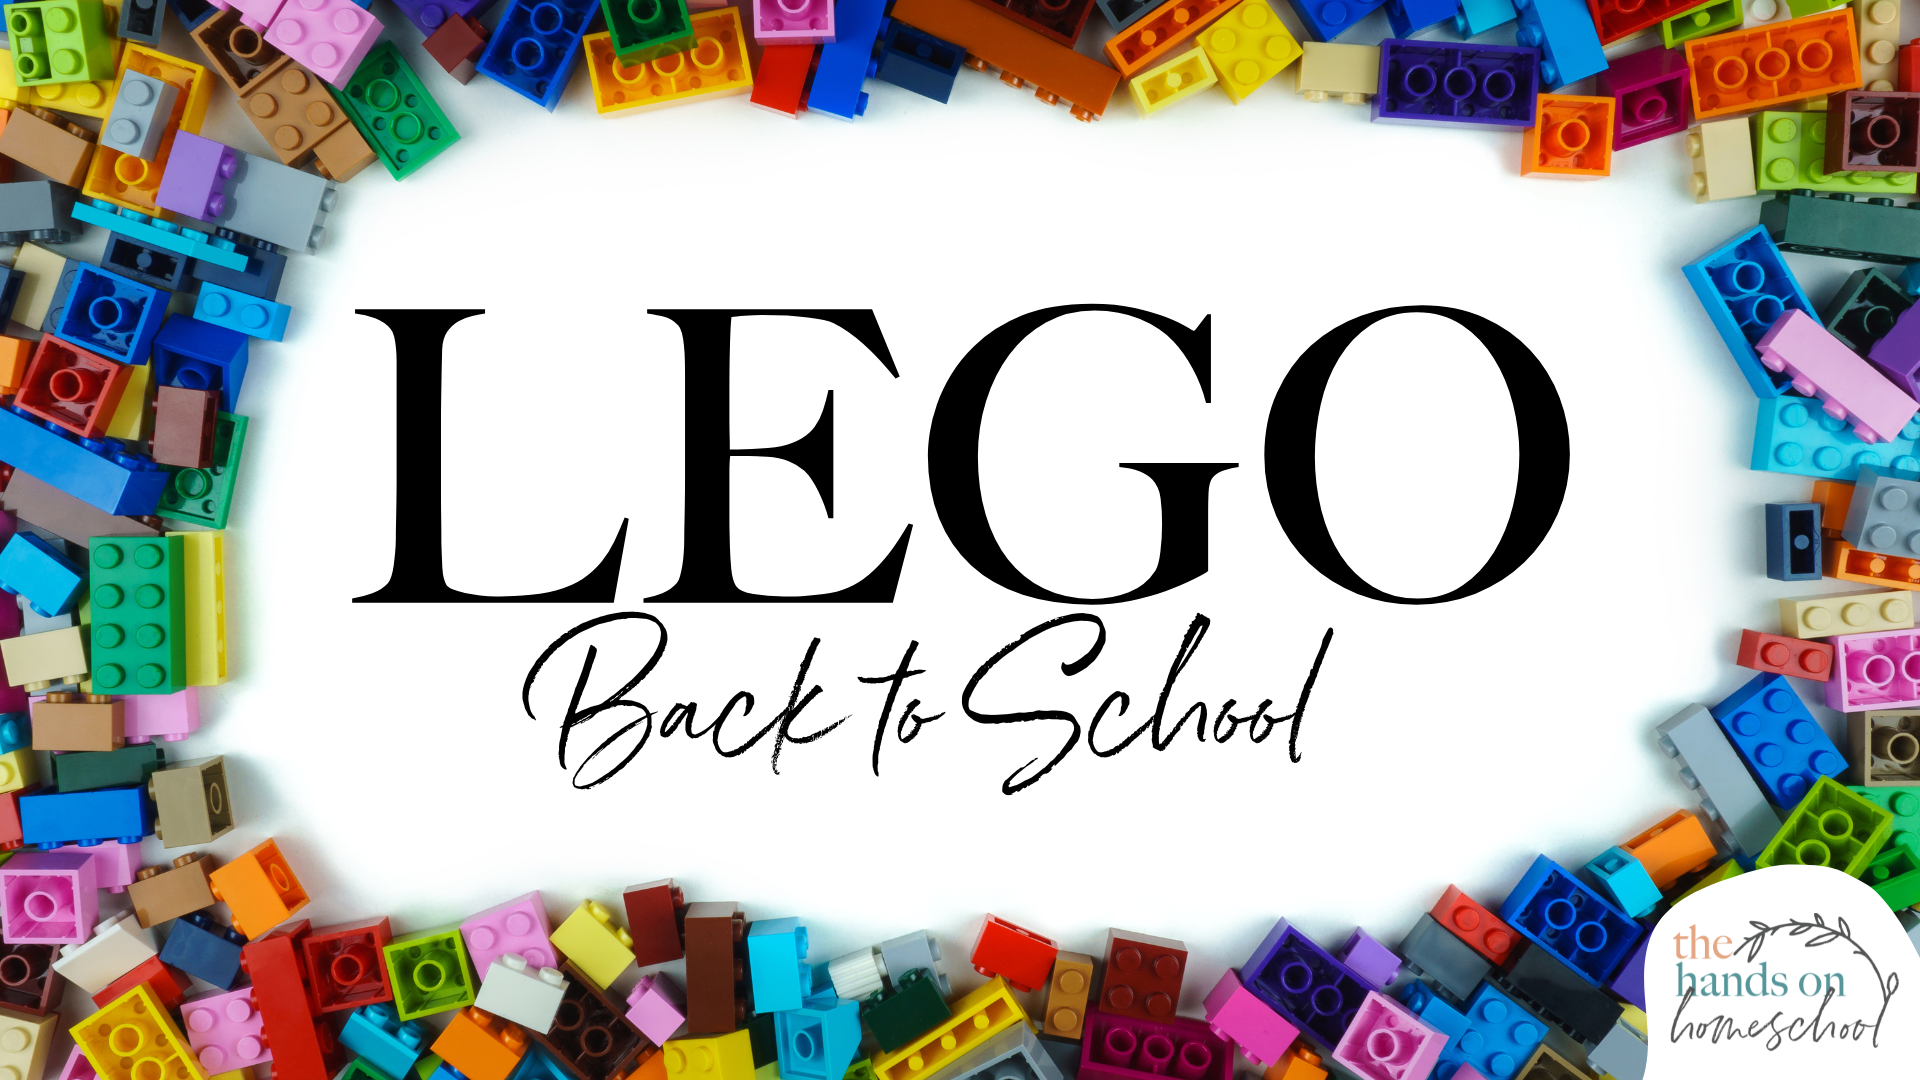 LEGO back to school 